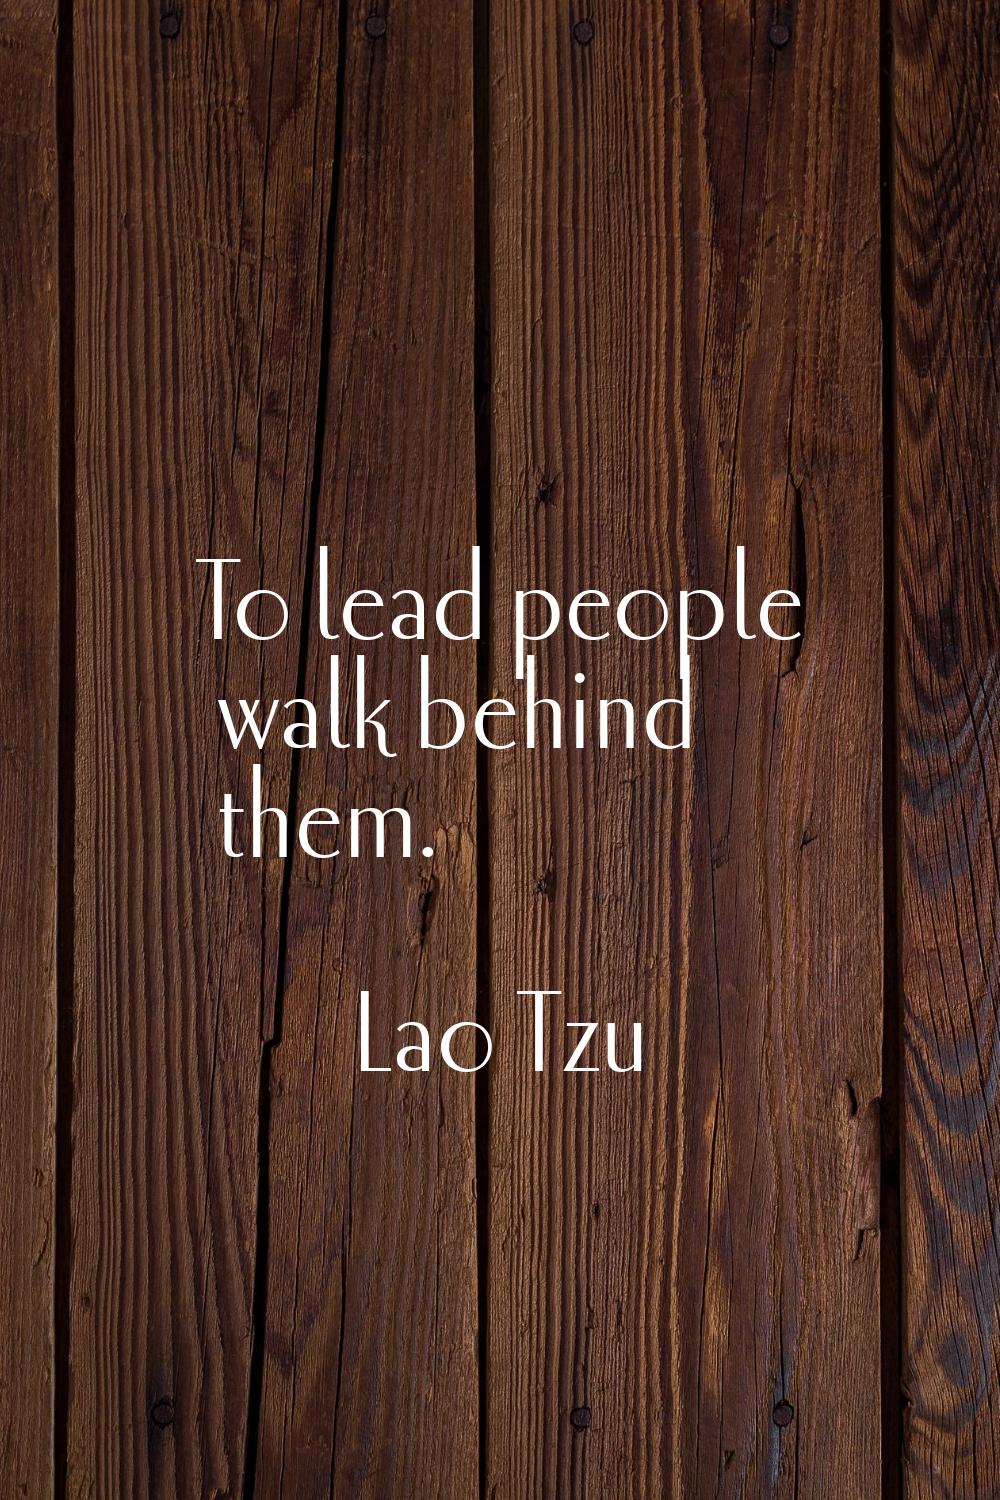 To lead people walk behind them.